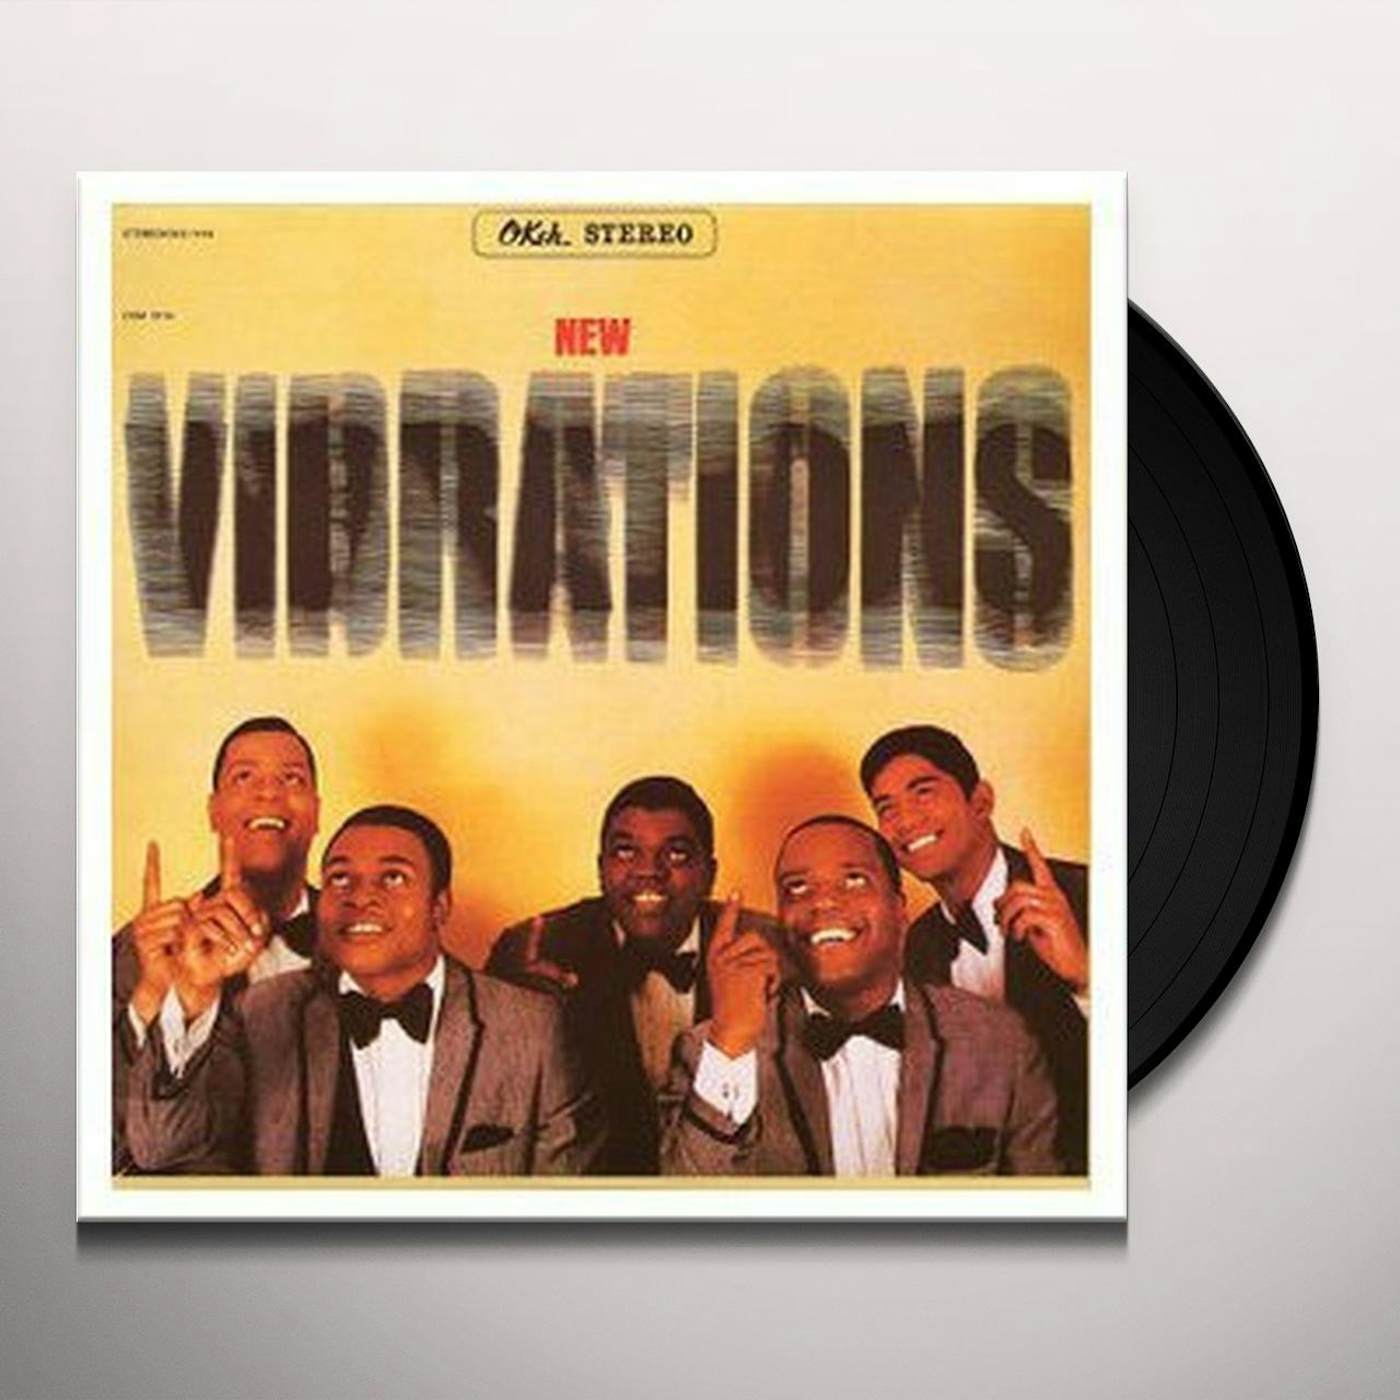 New The Vibrations Vinyl Record